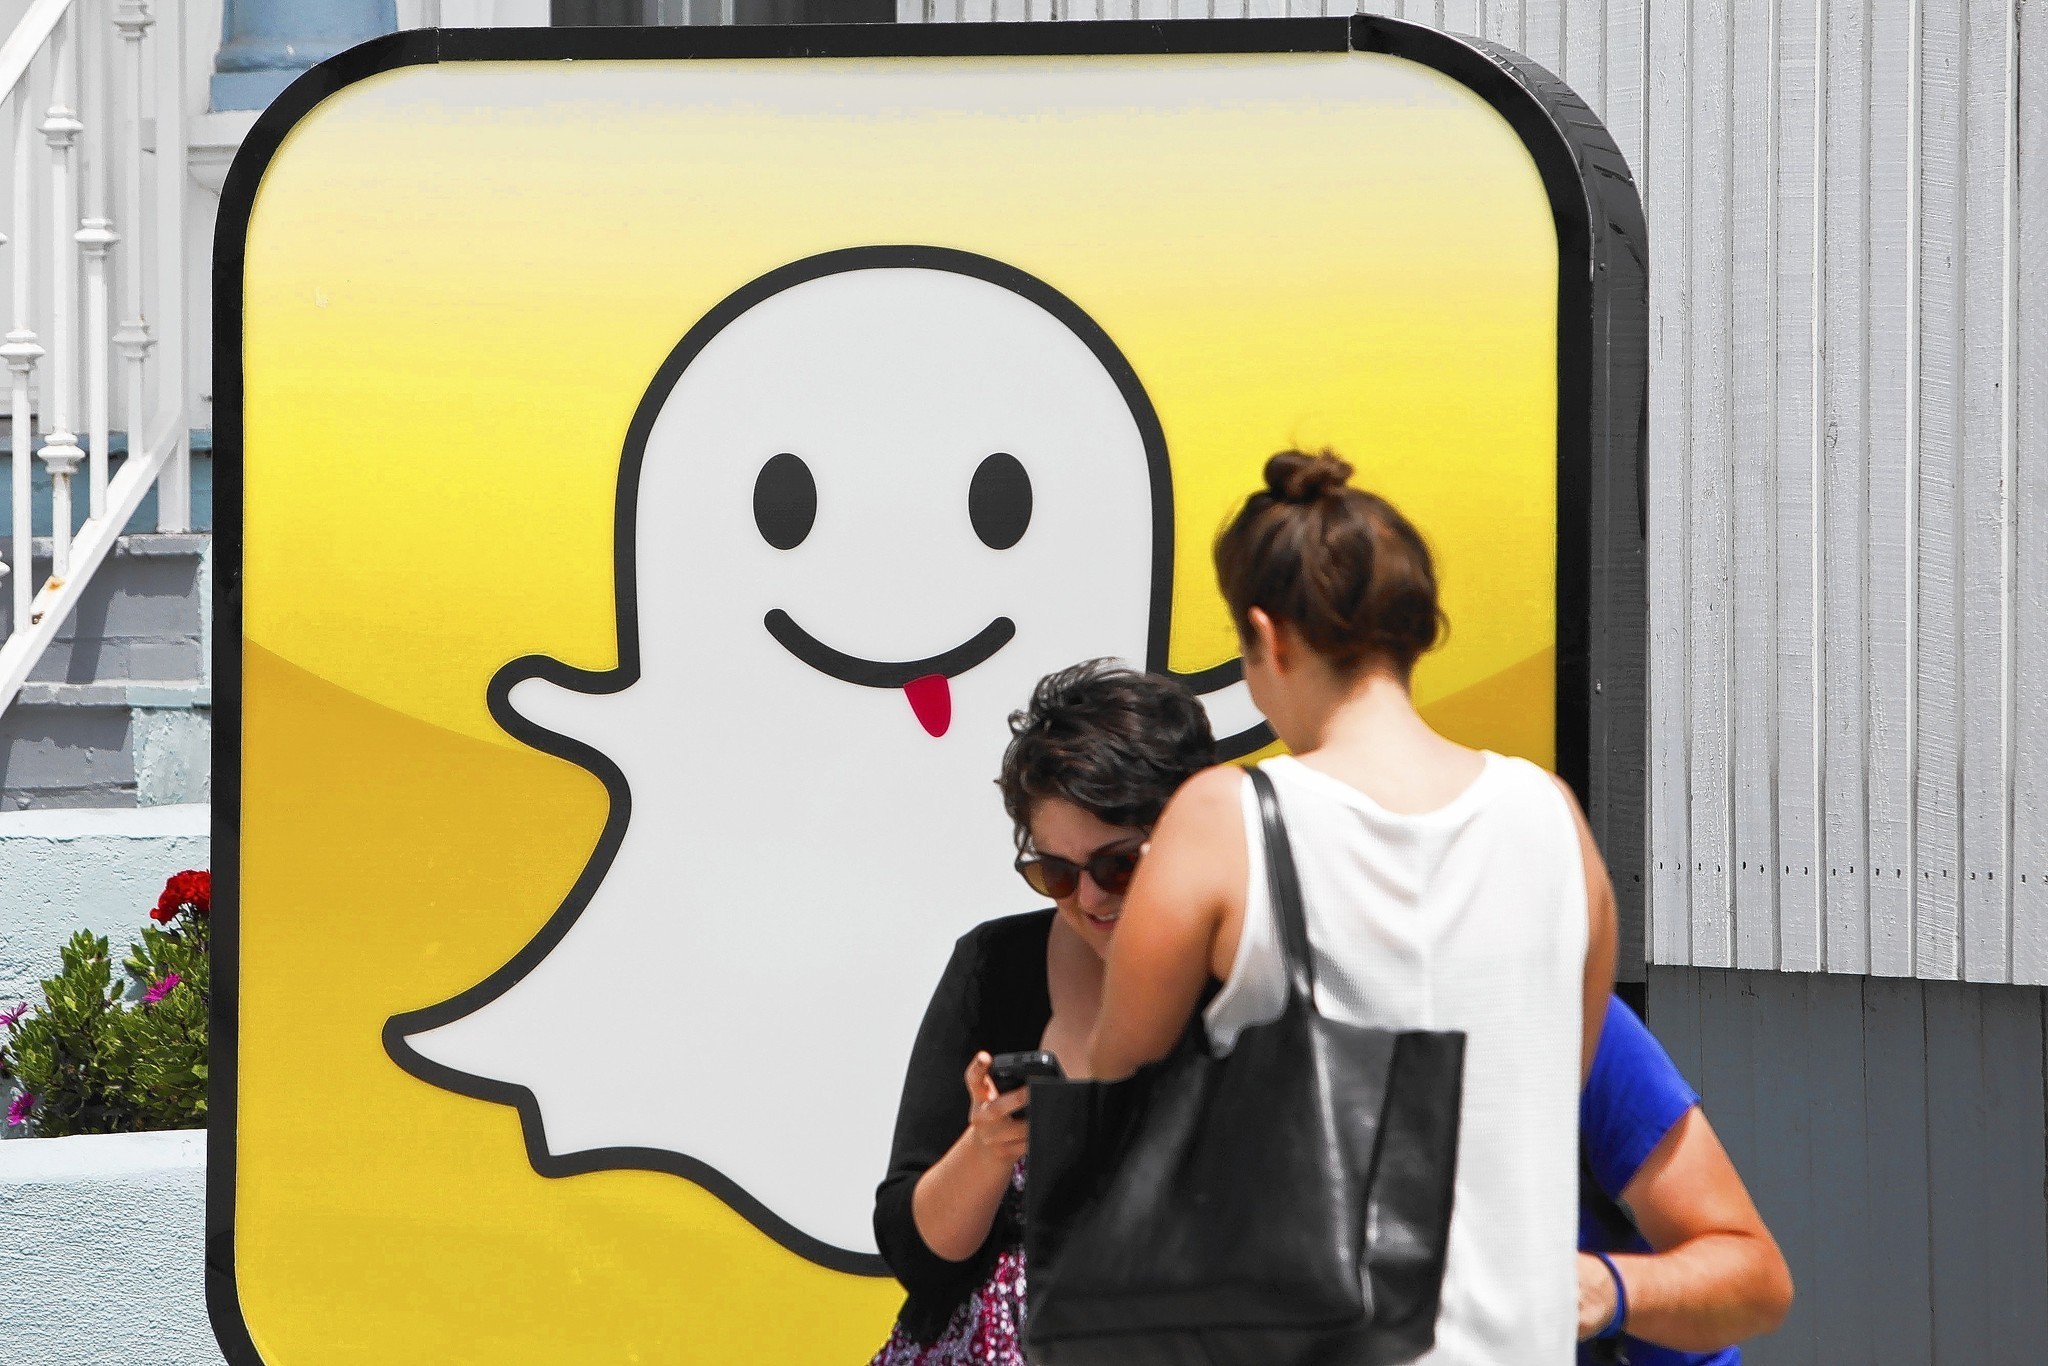 Snapchat funding rumors